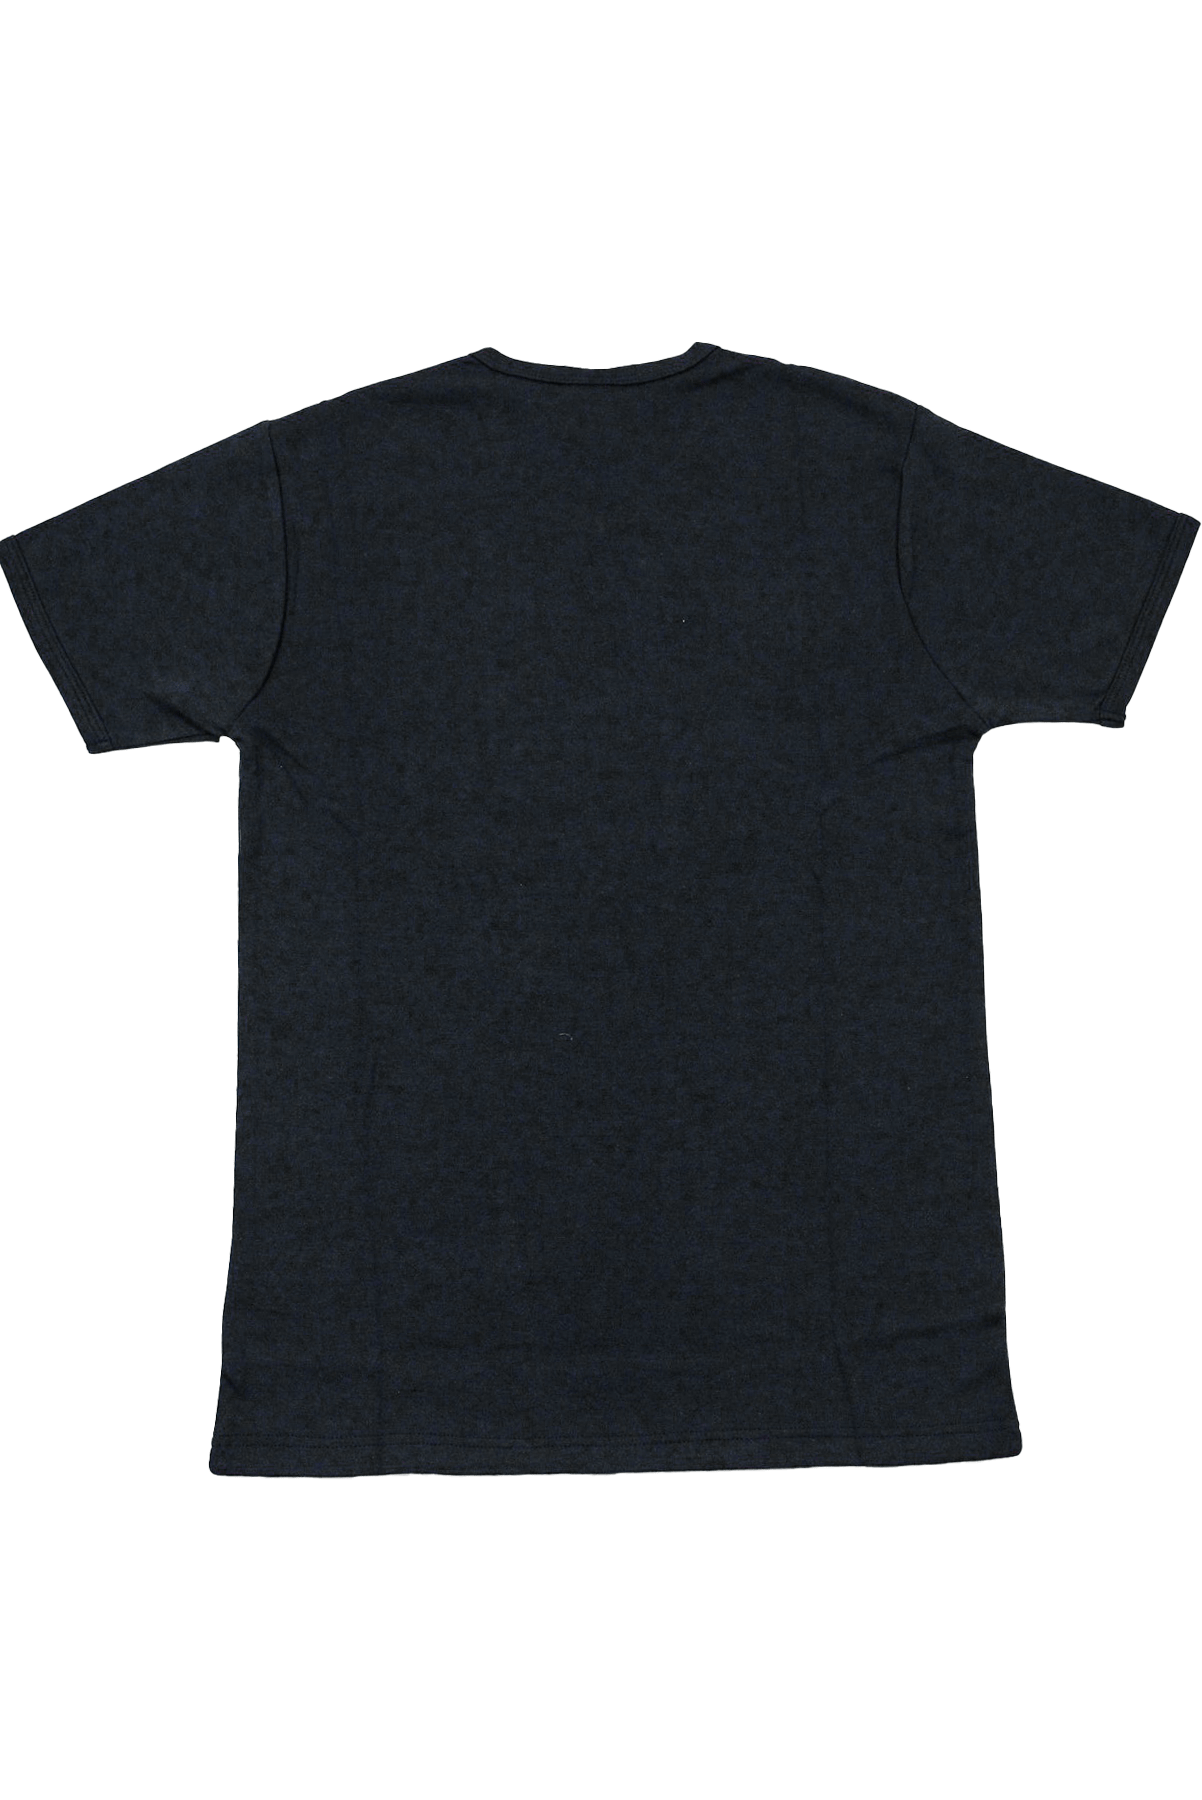 Black Urban T-shirt